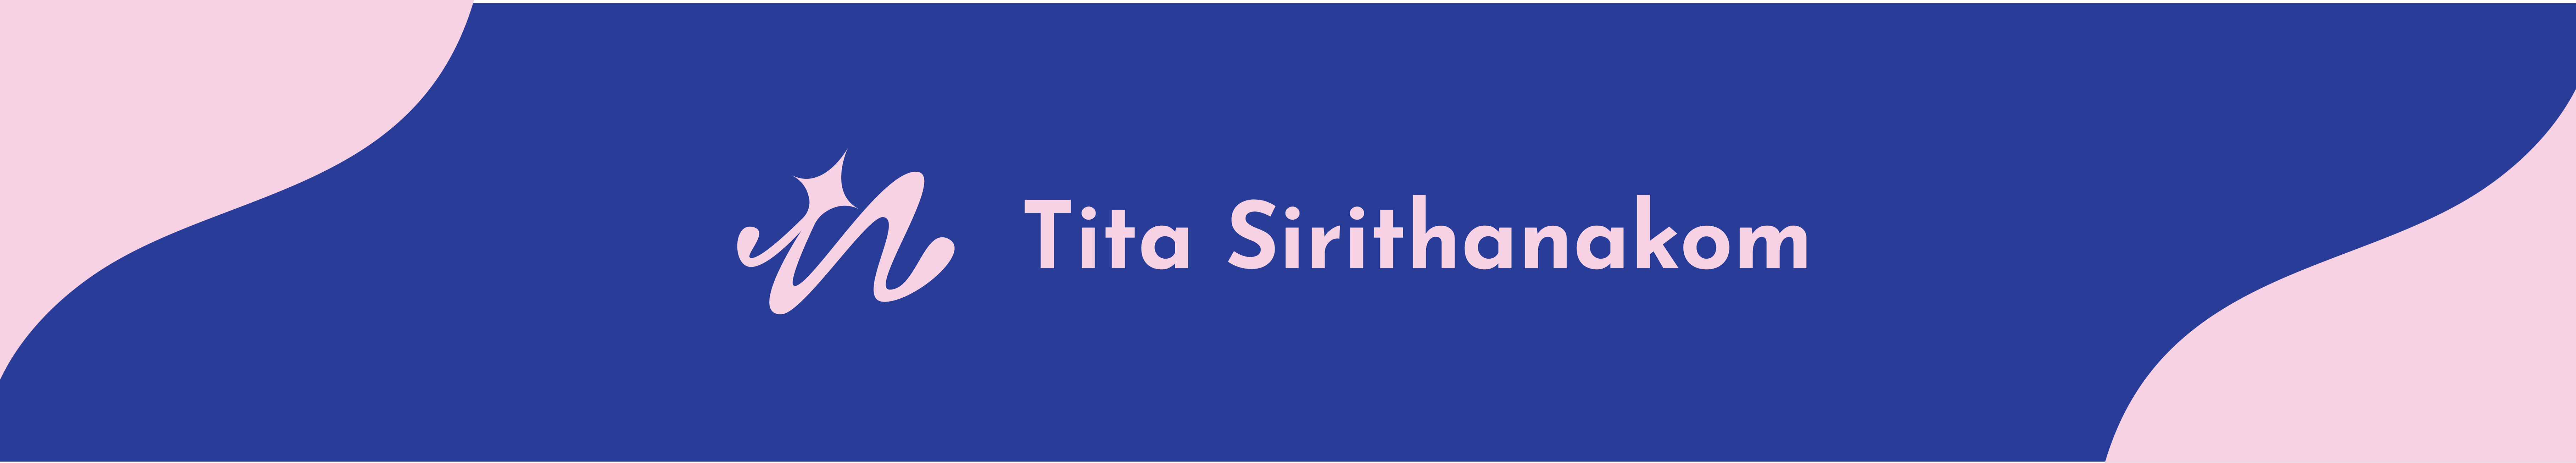 Bannière de profil de Tita Sirithankom